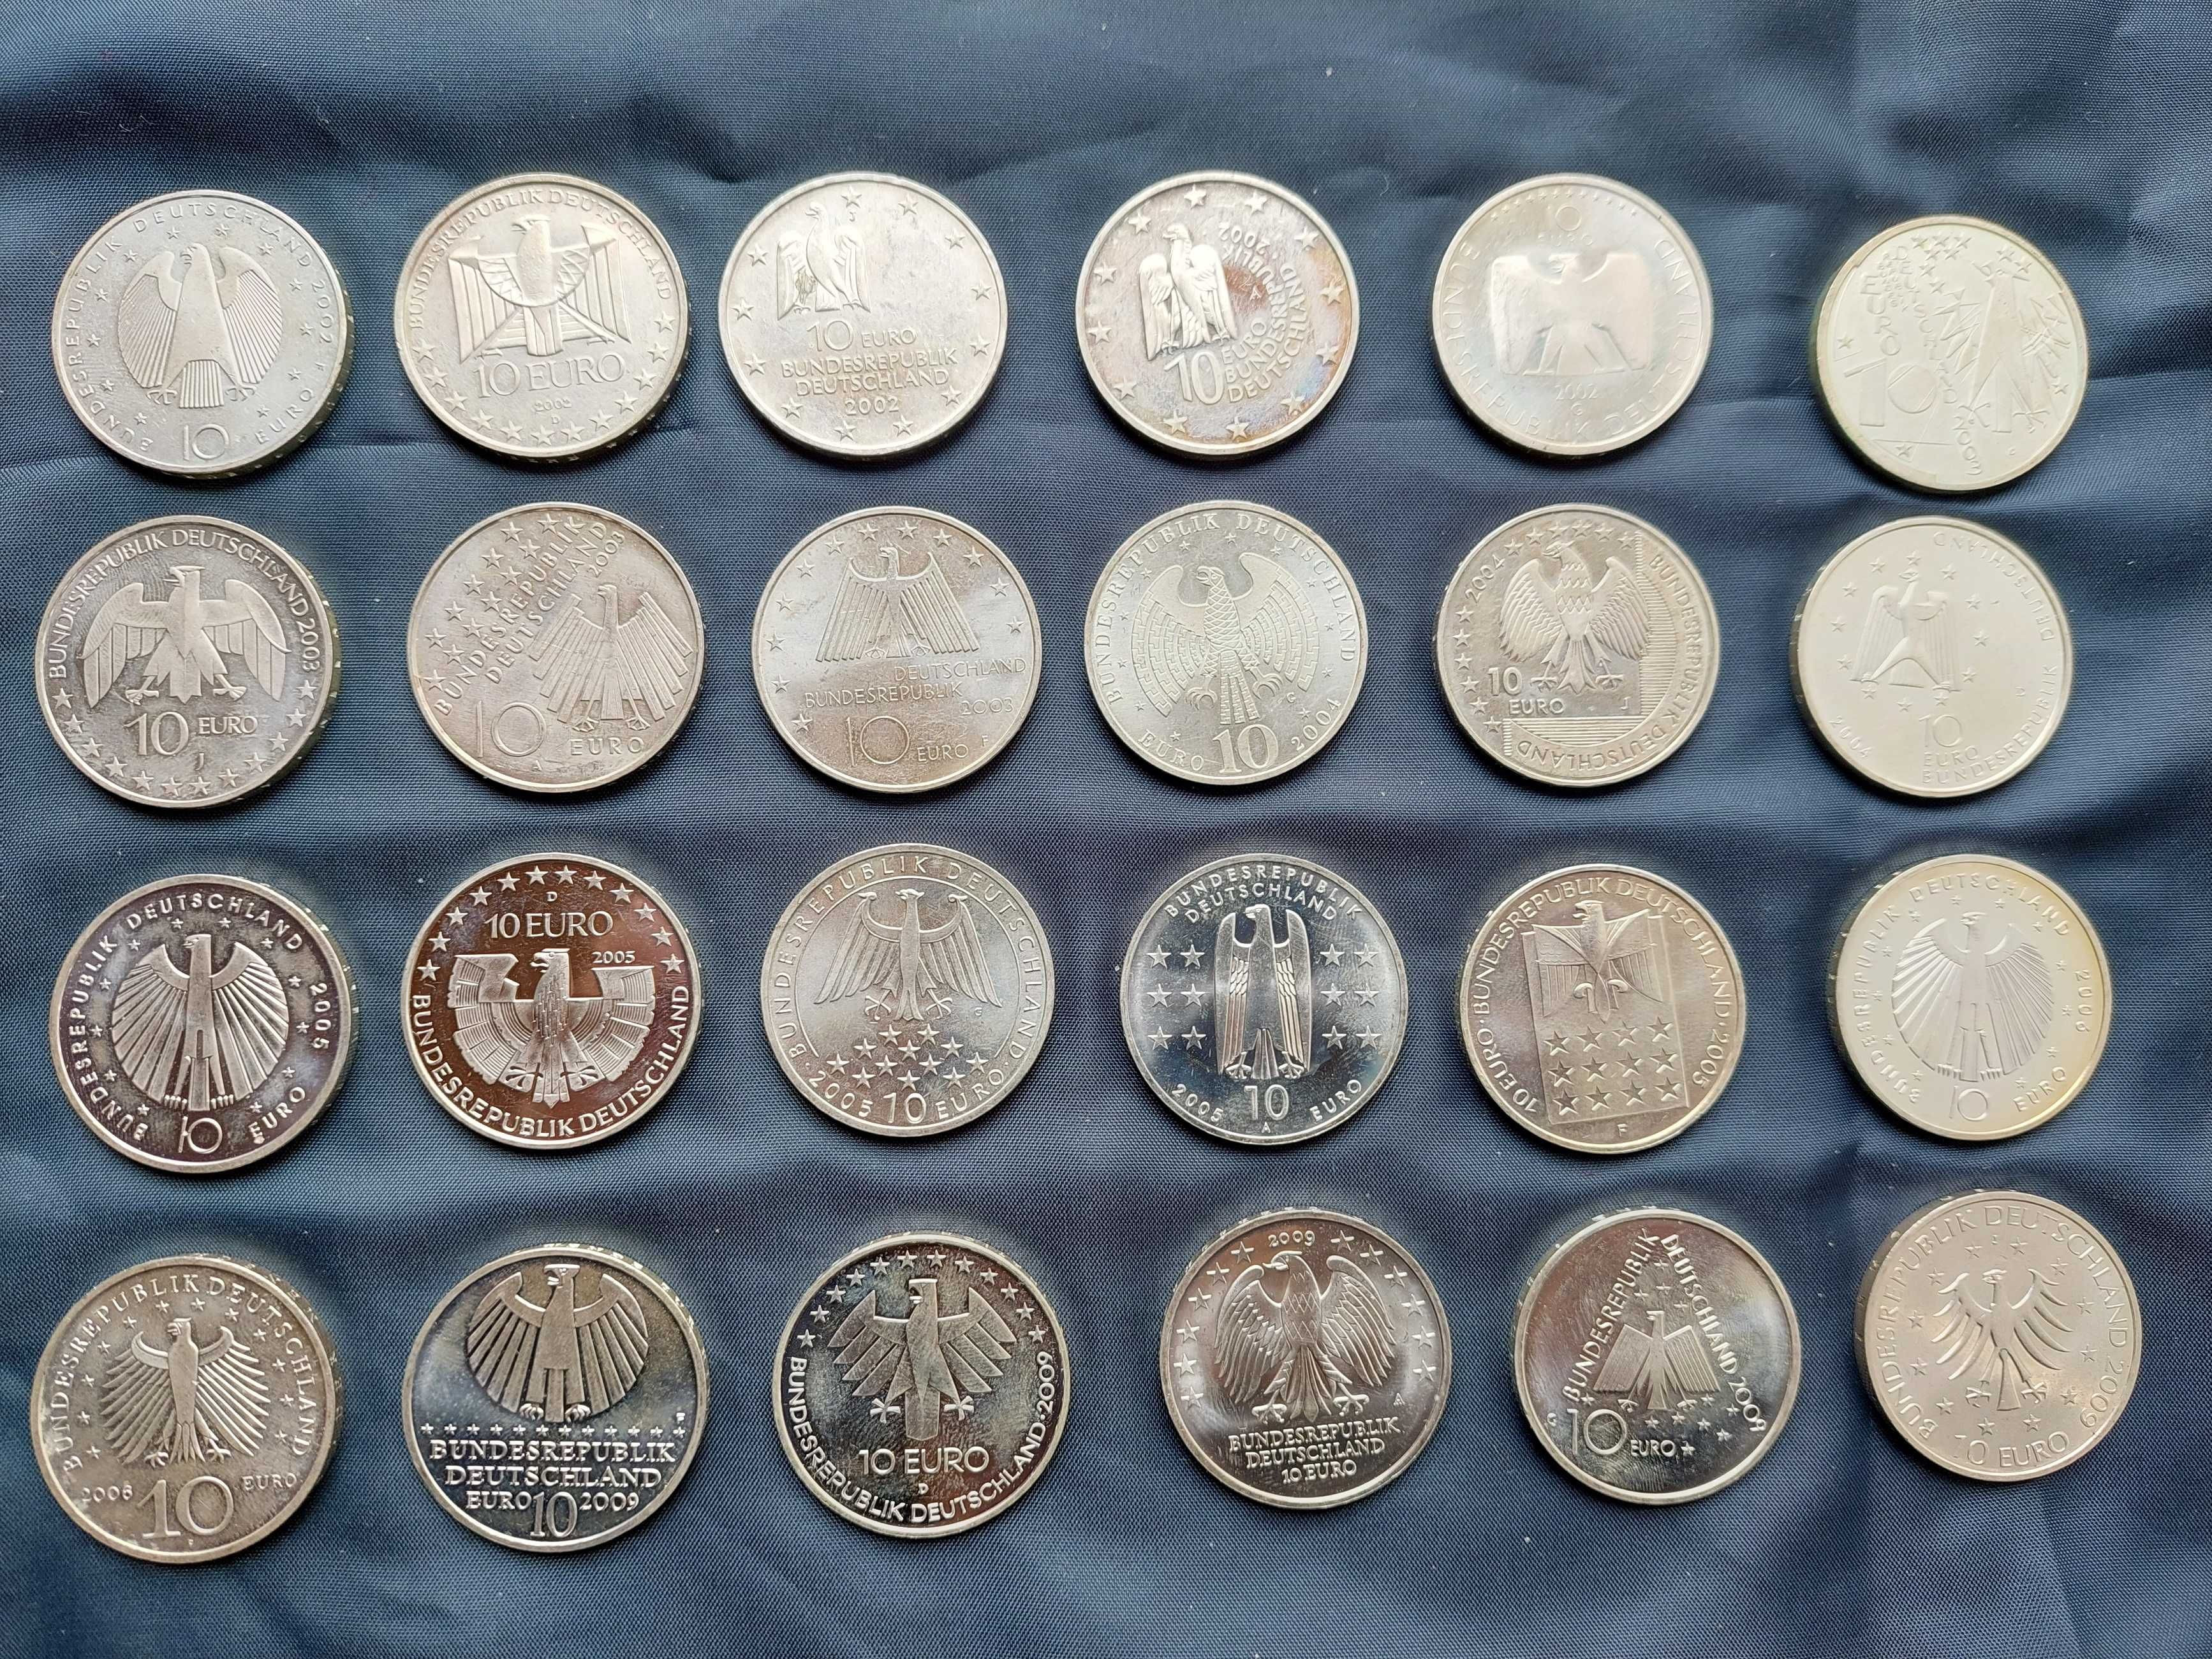 Monede de argint 925 Germania, 5,4 lei/g